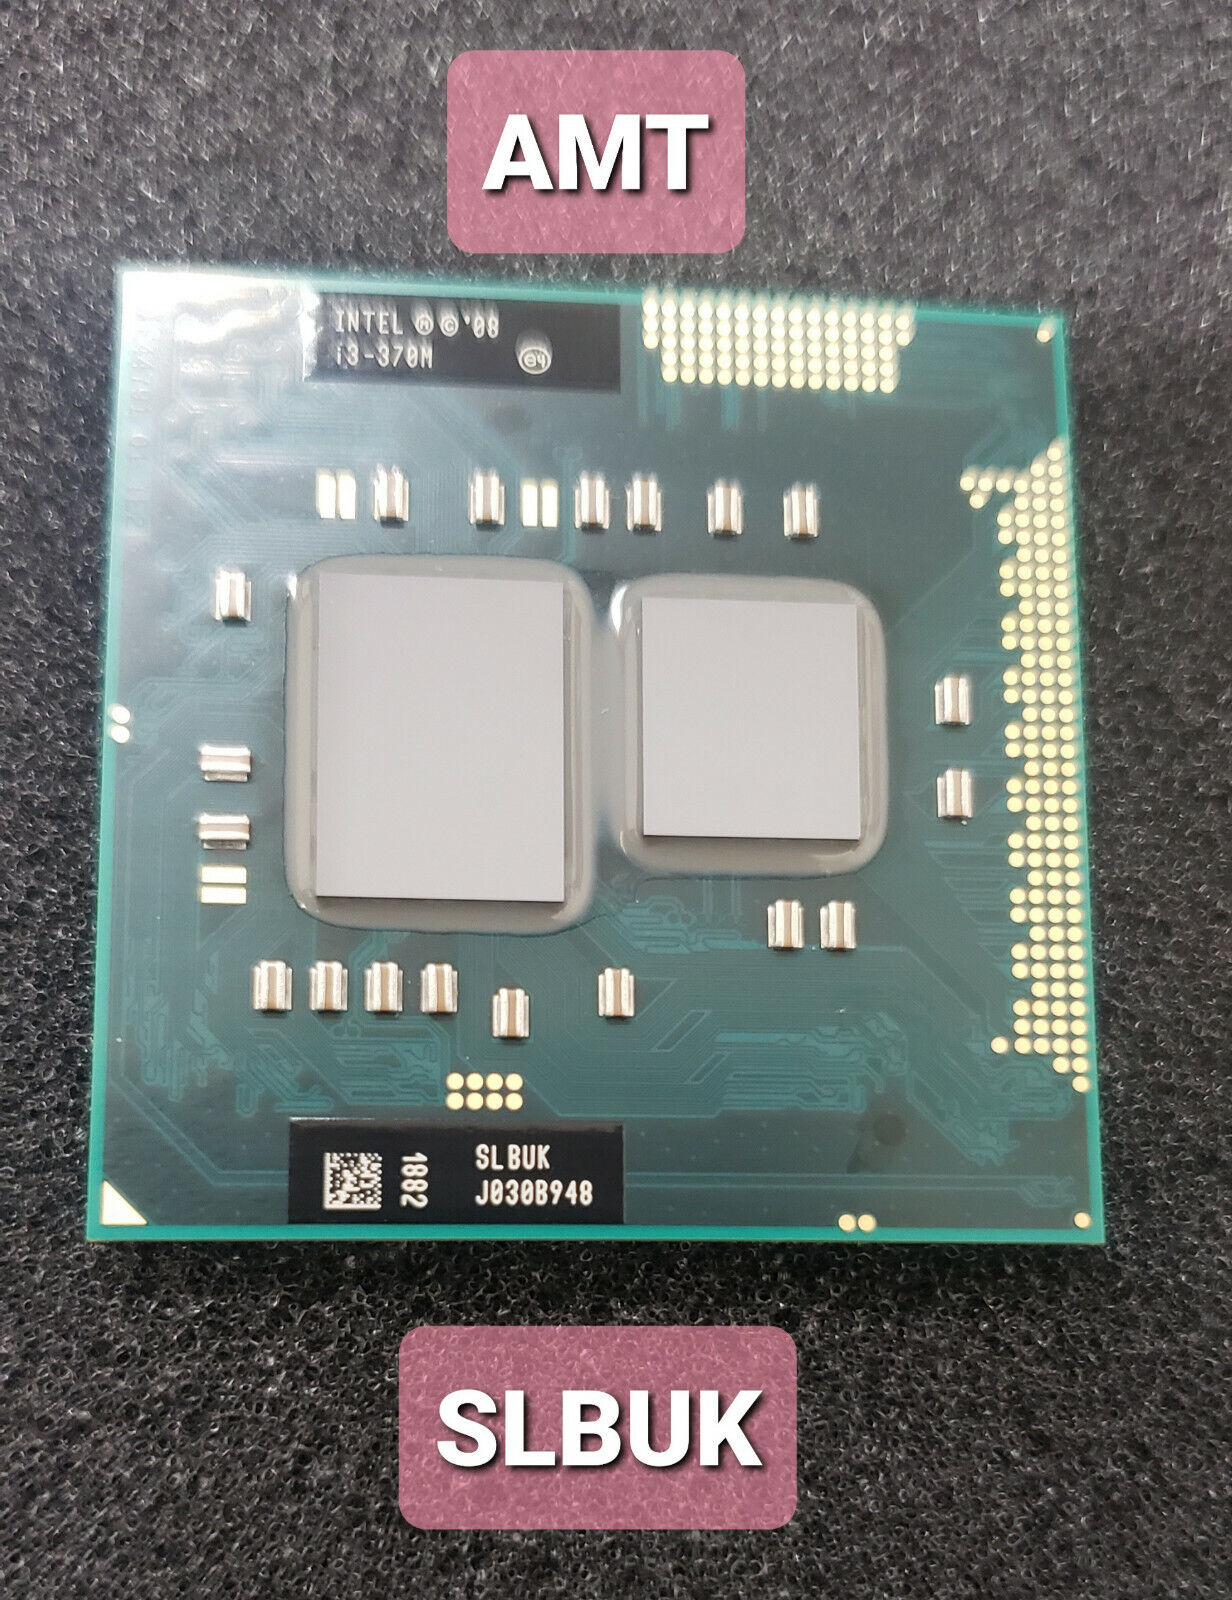 SLBUK Intel Core i3-370M 2.4GHz Socket G1 3MB CPU Processor